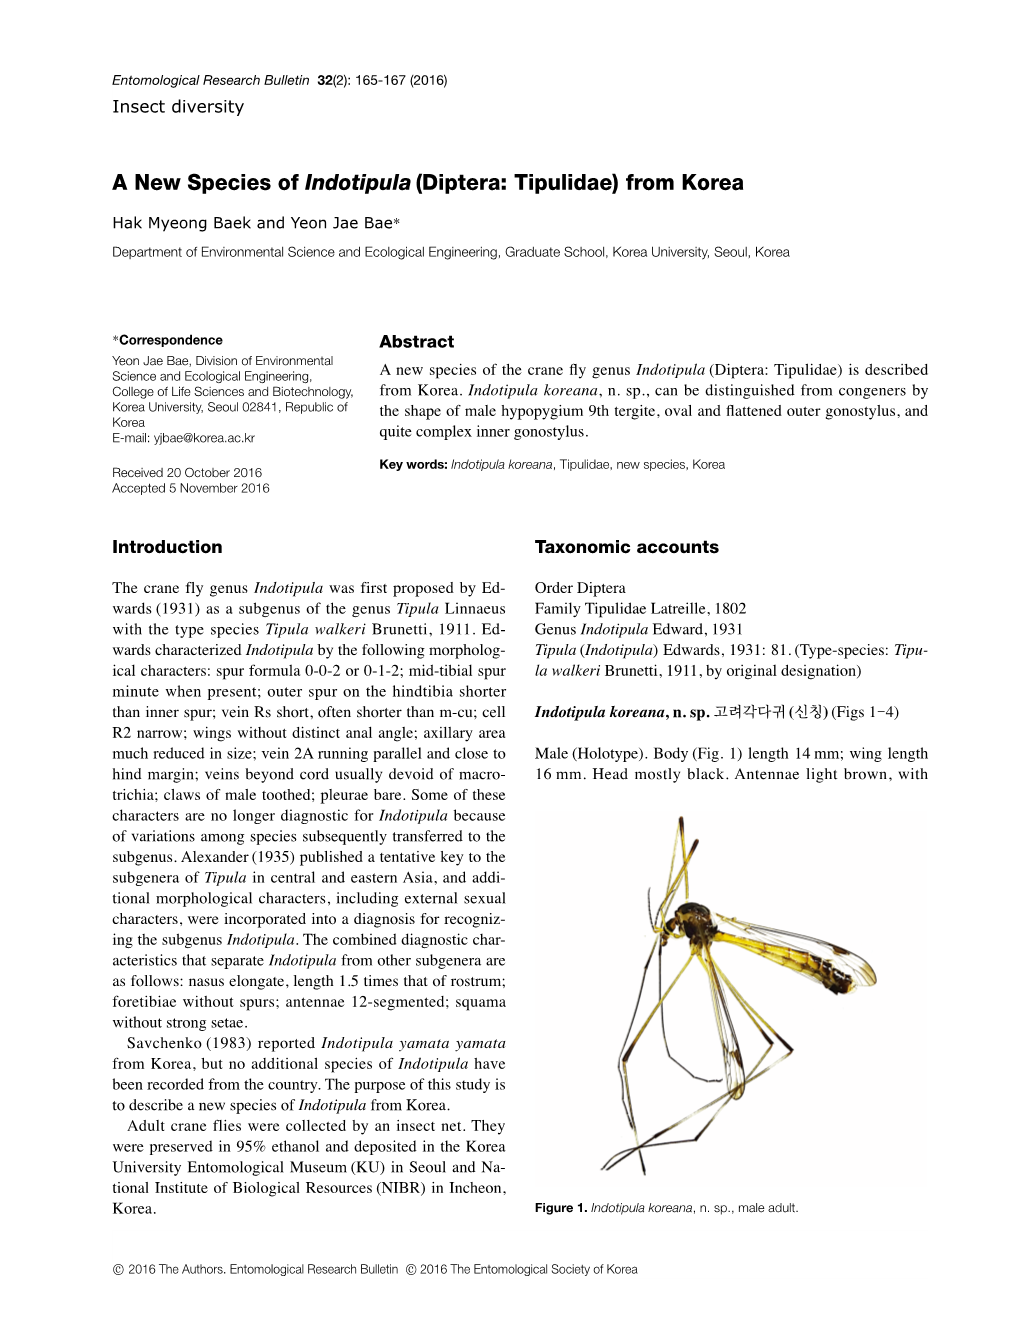 A New Species of Indotipula (Diptera: Tipulidae) from Korea